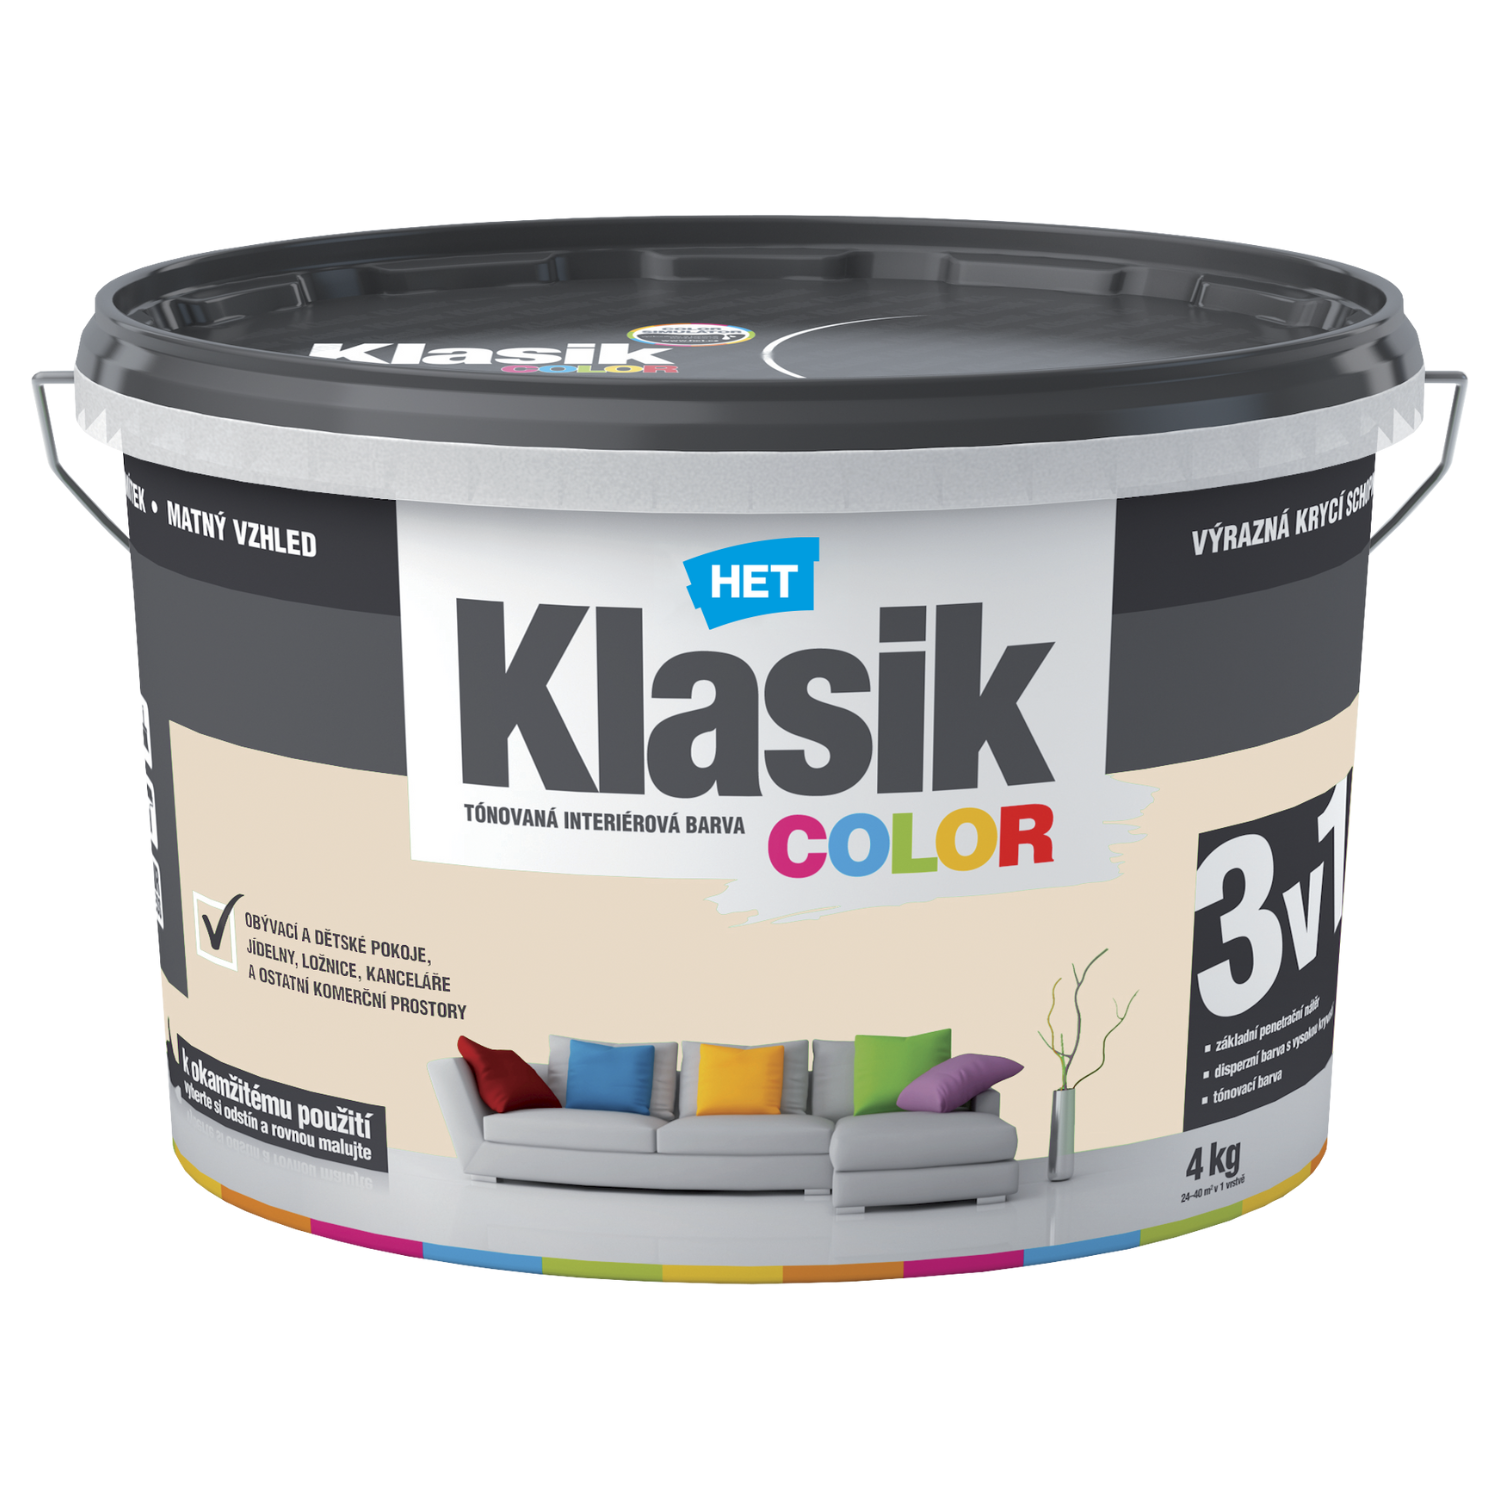 HET Klasik COLOR tónovaná interiérová akrylátová disperzná oteruvzdorná farba 4 kg, KC0217 - béžový kávový